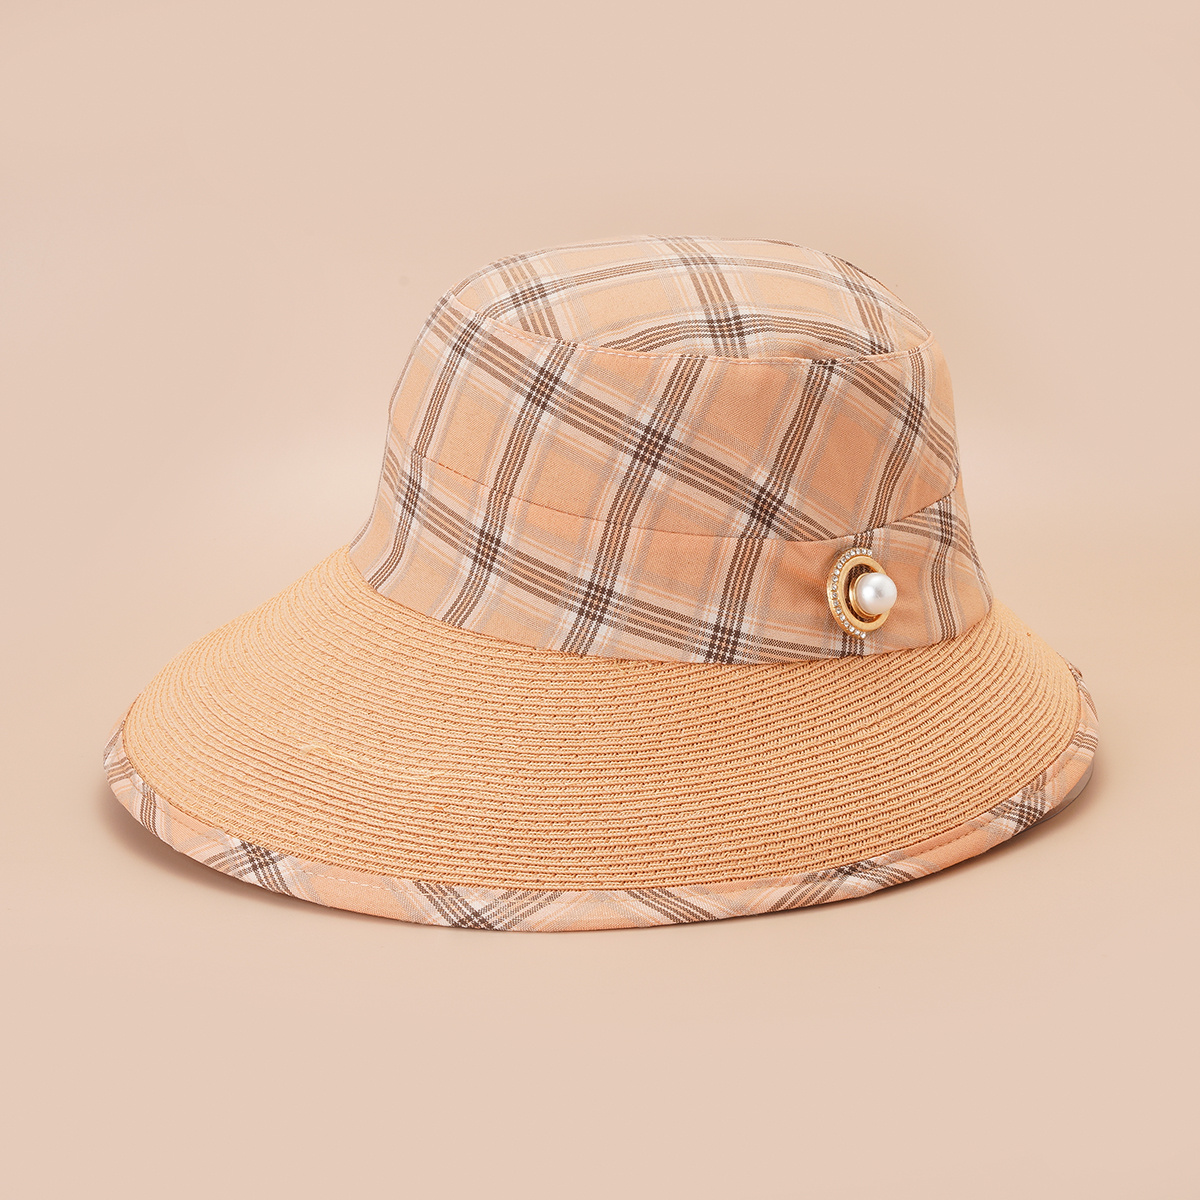 Spring Summer Fisherman Cap Women Fashion Retro Basin Hat Outdoor